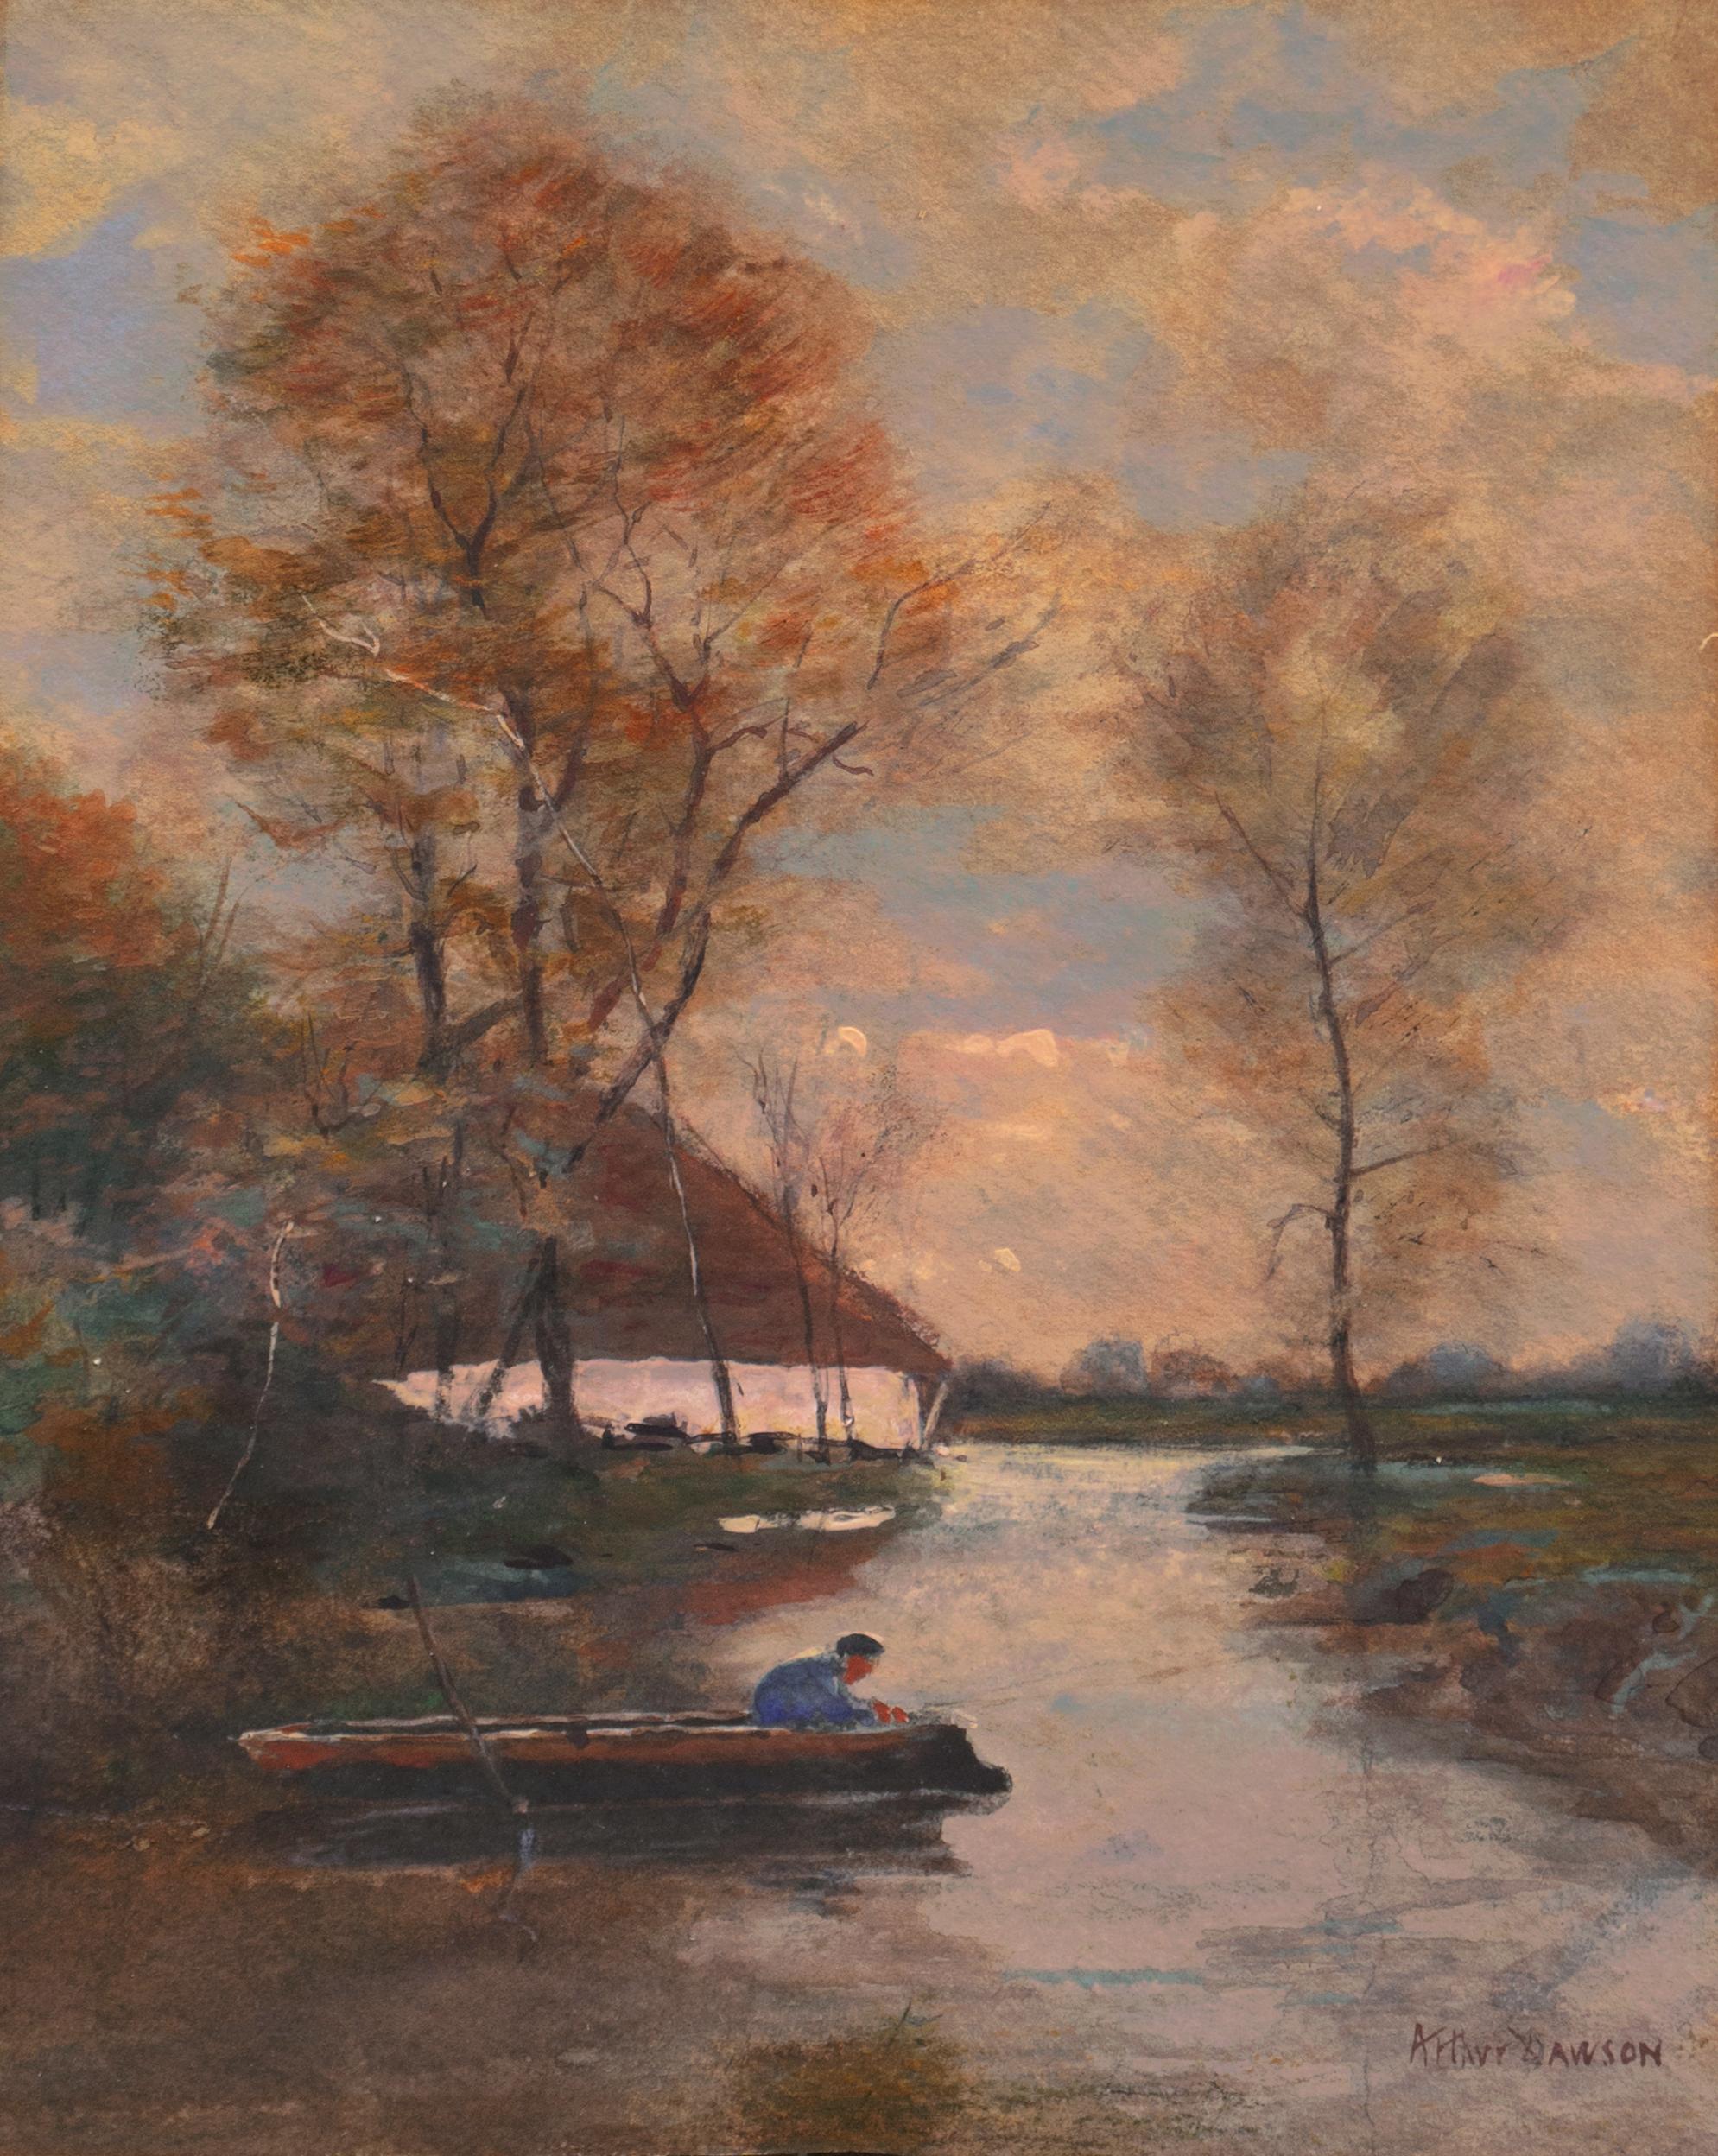 Arthur Dawson Landscape Art - 'Evening Fishing', Sunset River Landscape, Chicago Society of Artists, New York